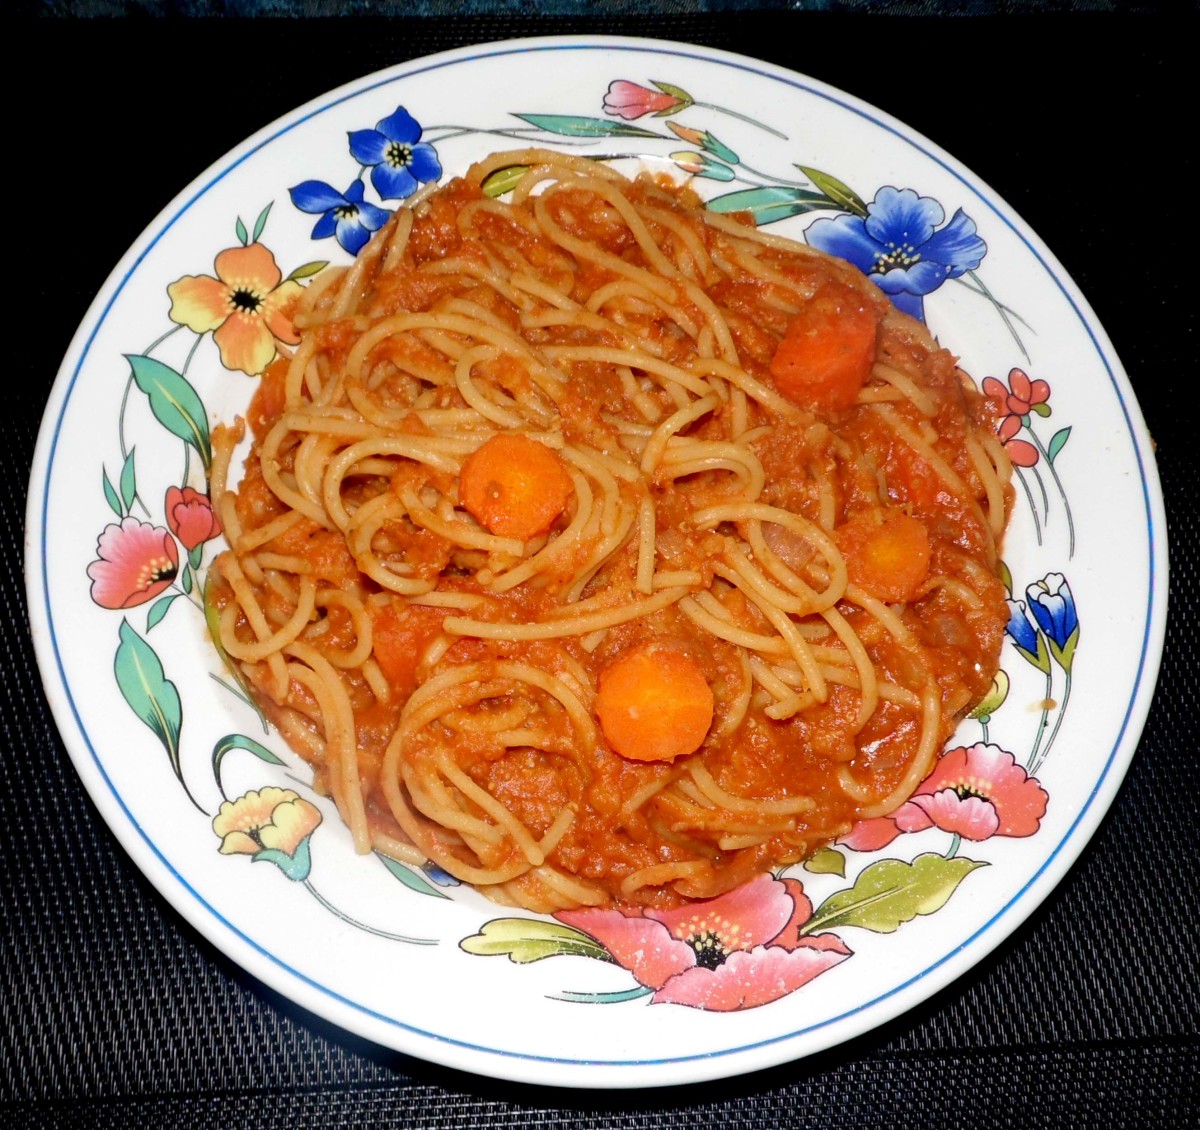 Vegan Italian Lentils and Spaghetti